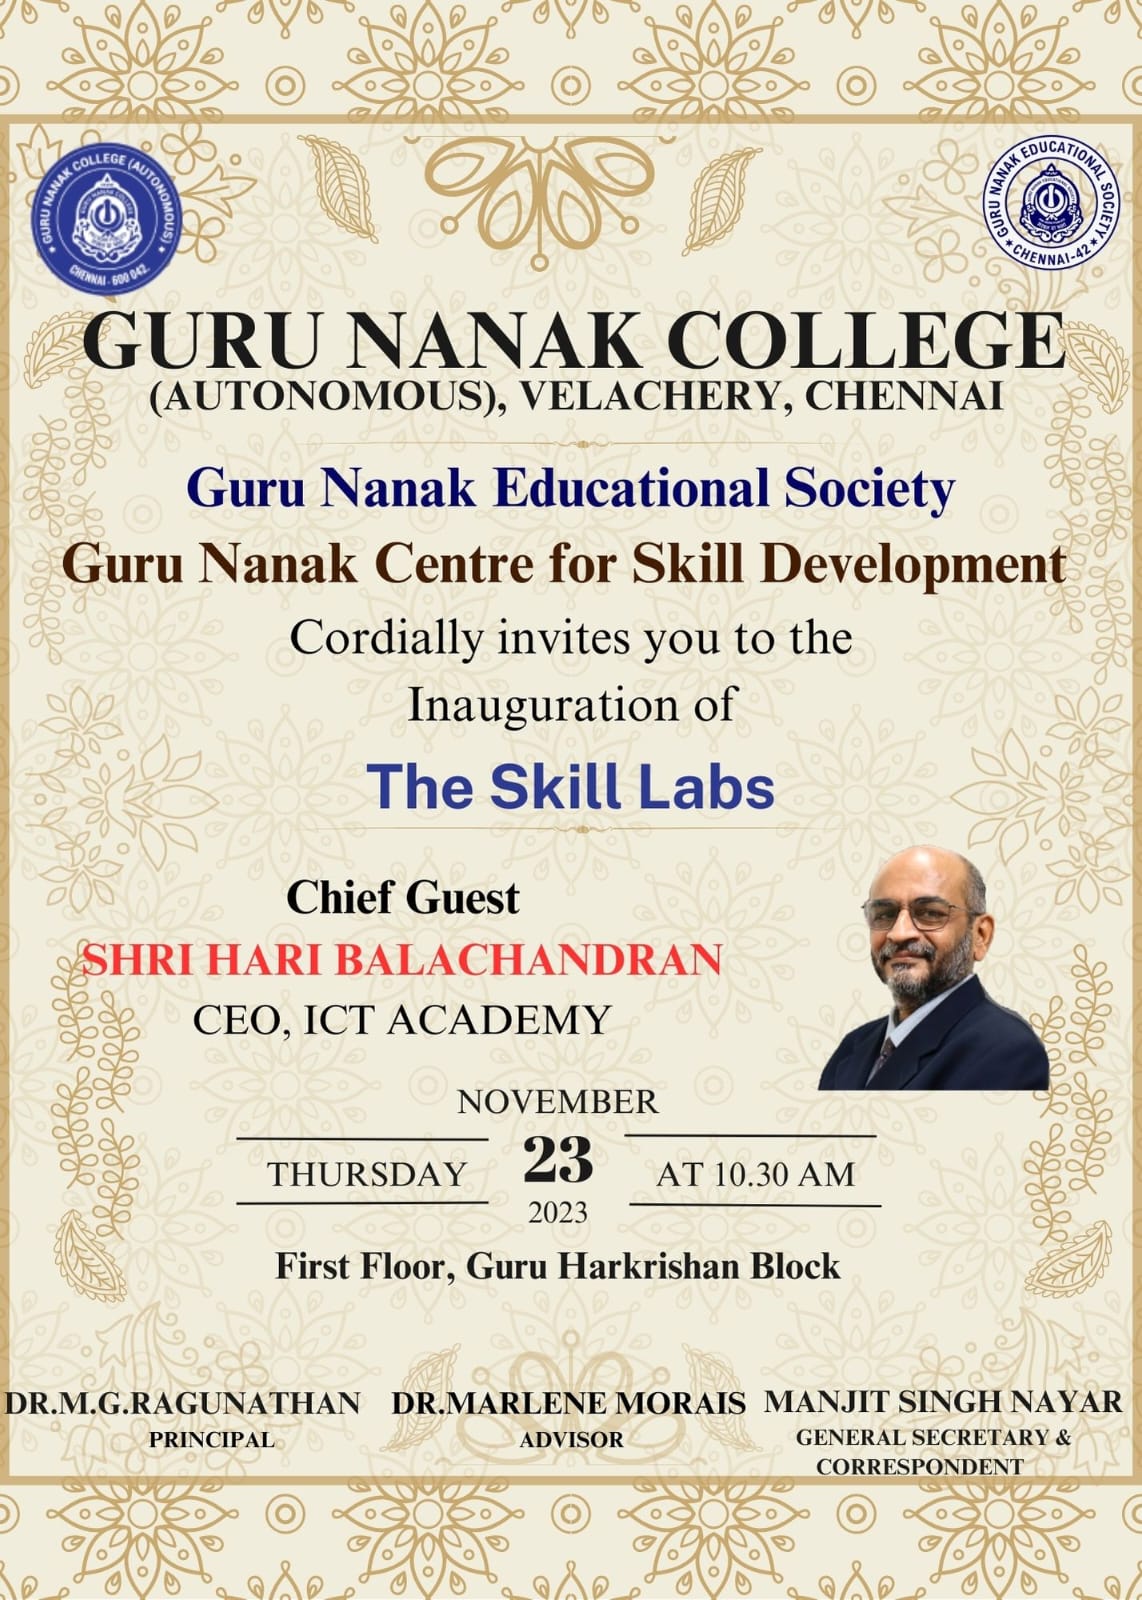 Inauguration of The Skill Labs by Chief Guest, Shri Hari Balachandran, CEO, ICT Academy.